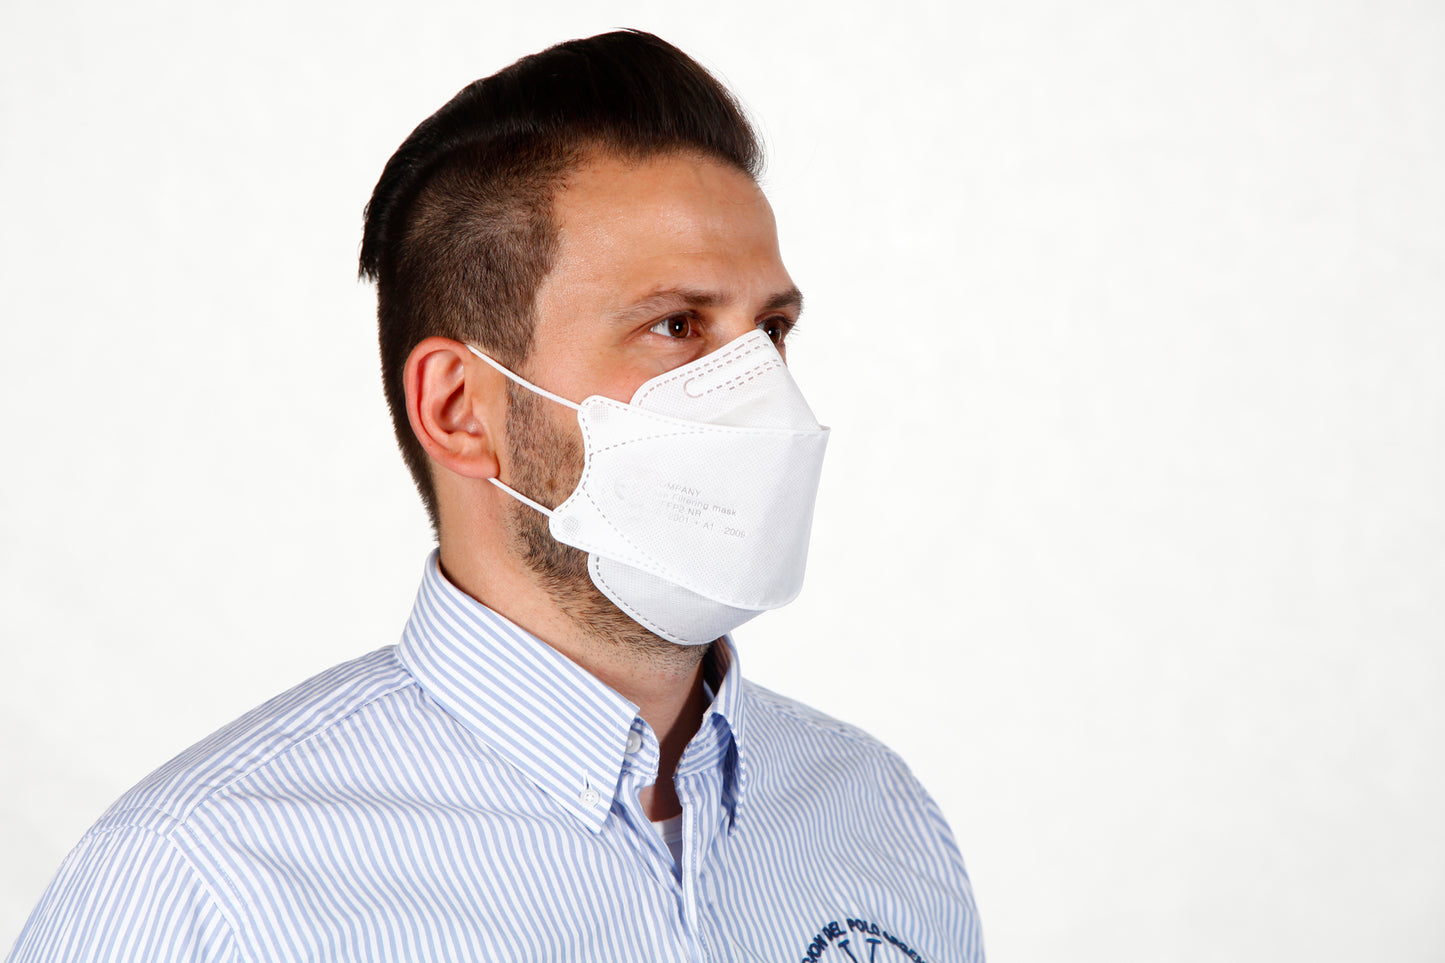 Air Ease FFP2 Maske NR Nanofilter Atemschutzmaske